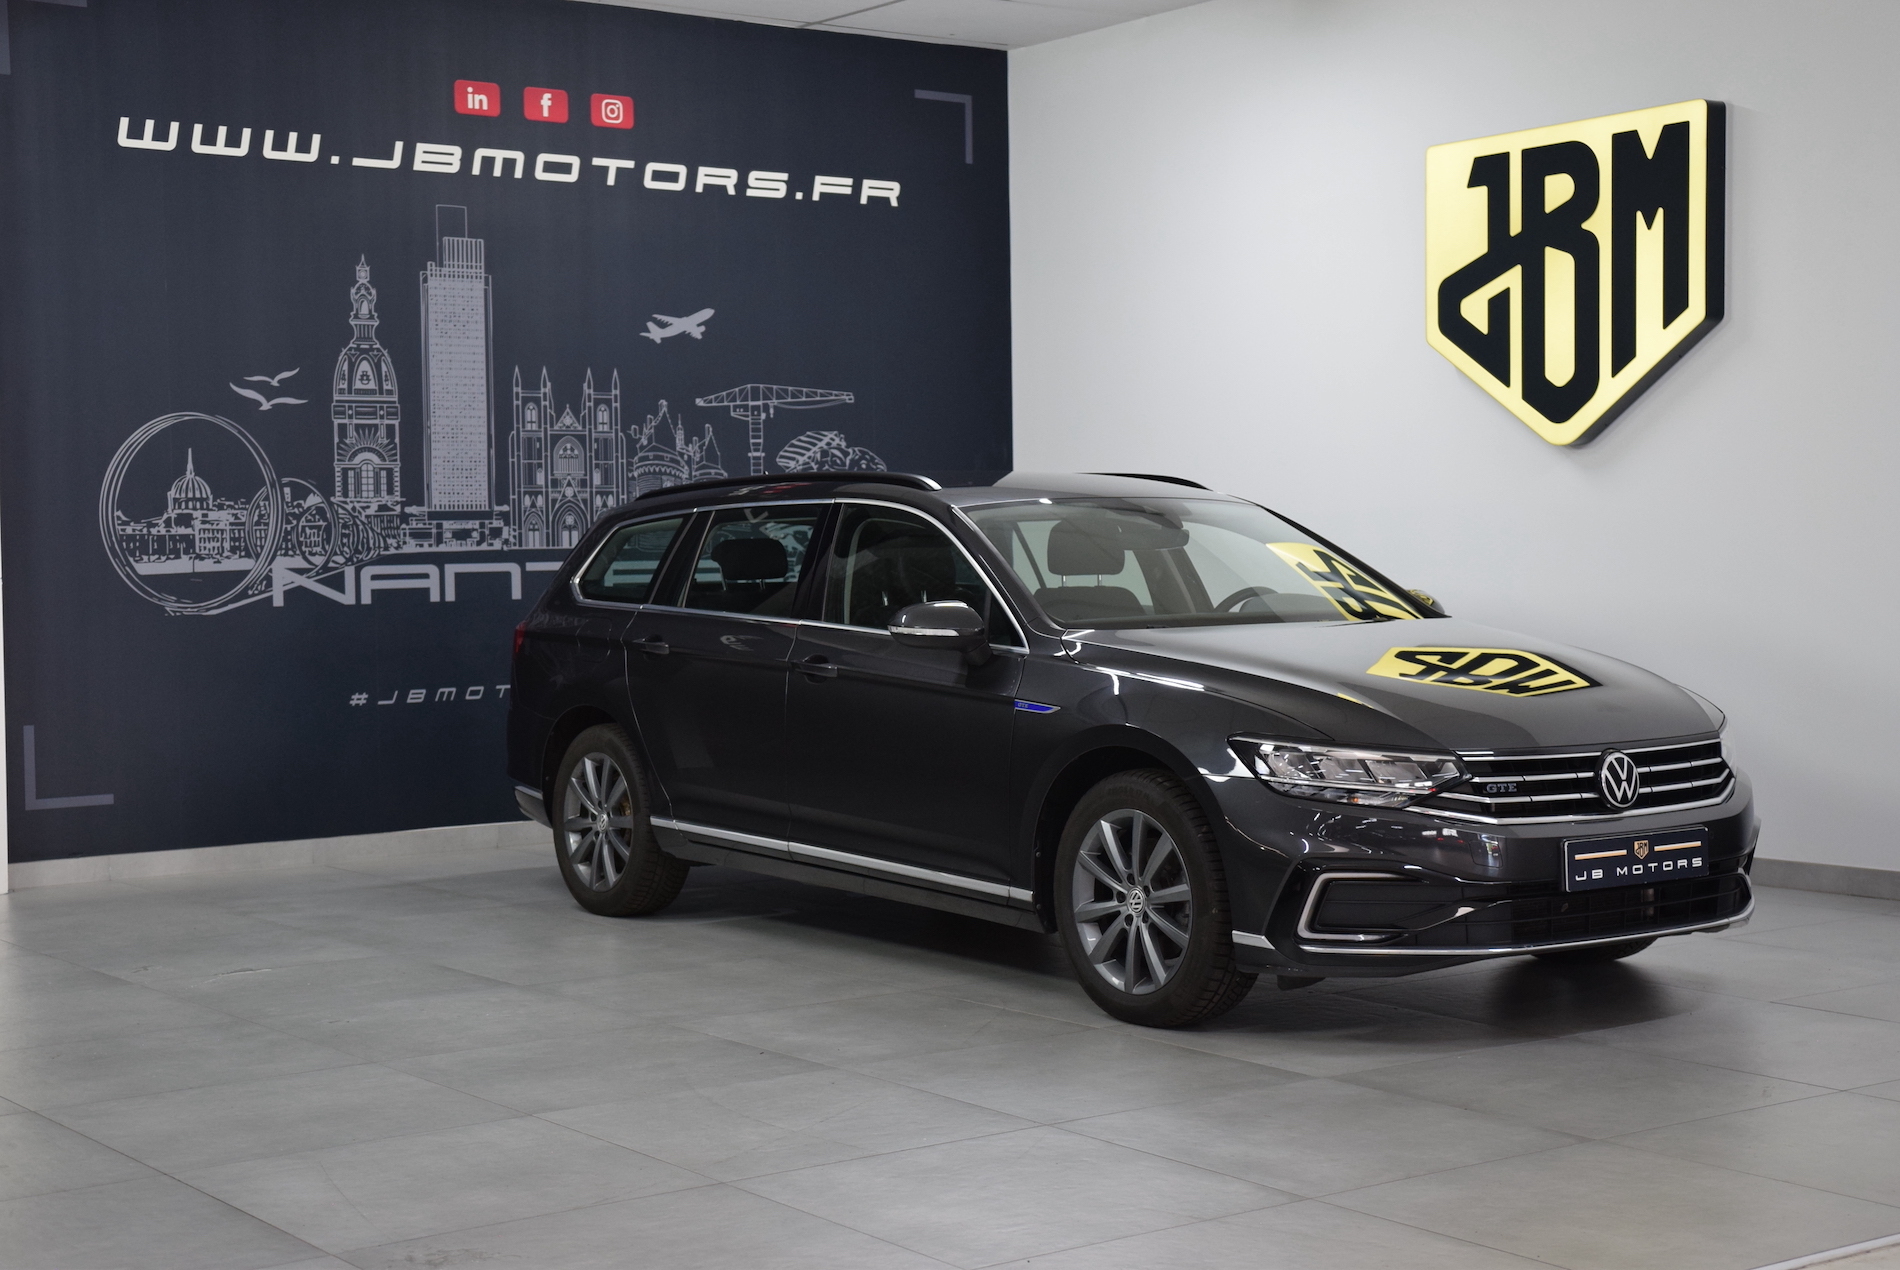 10 -  Volkswagen Passat GTE  d'occasion disponible chez JB MOTORS NANTES - .JPG